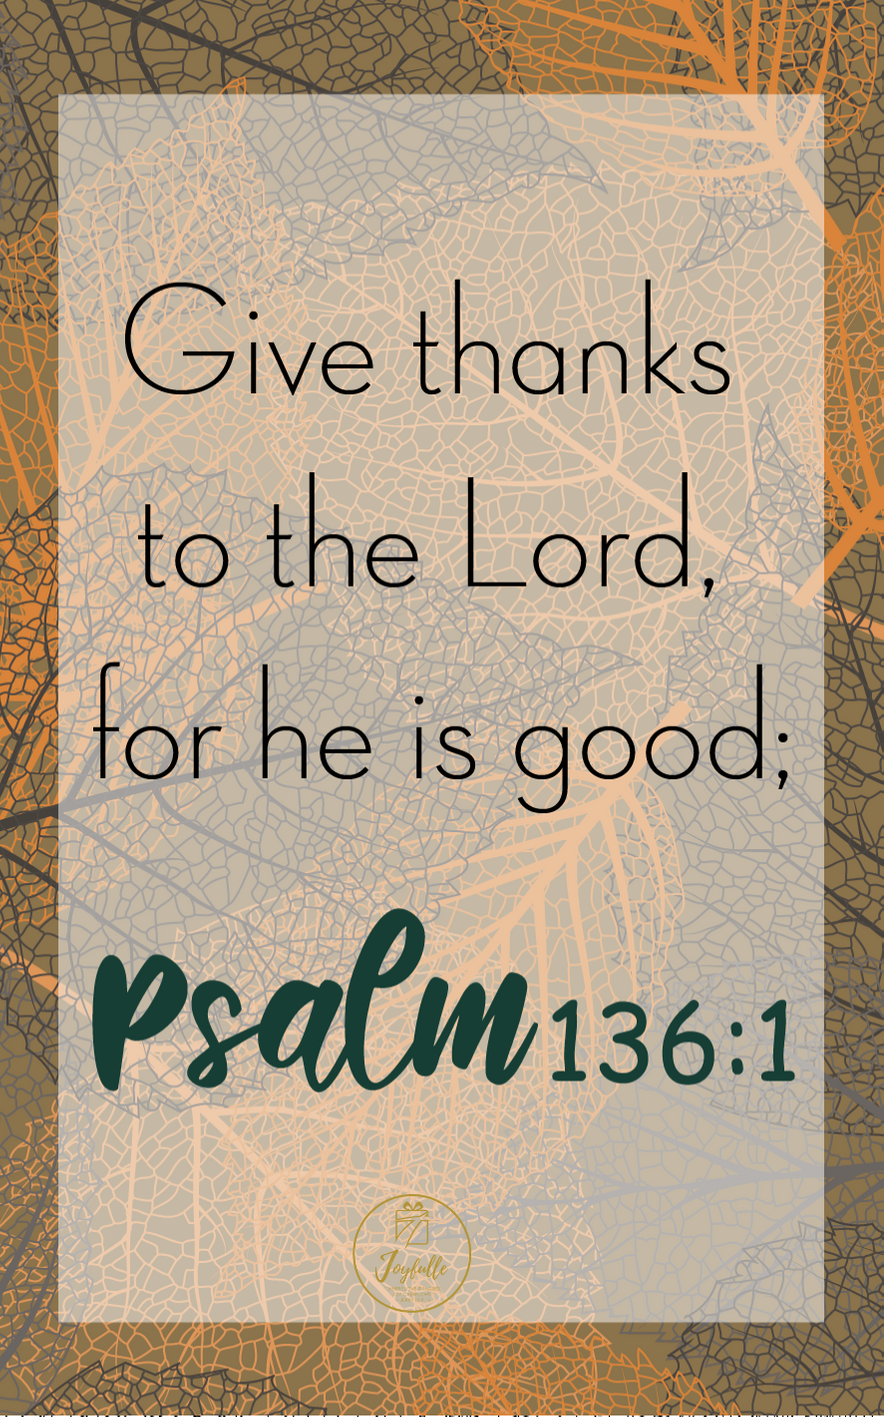 Thanksgiving Day Greeting Card 18